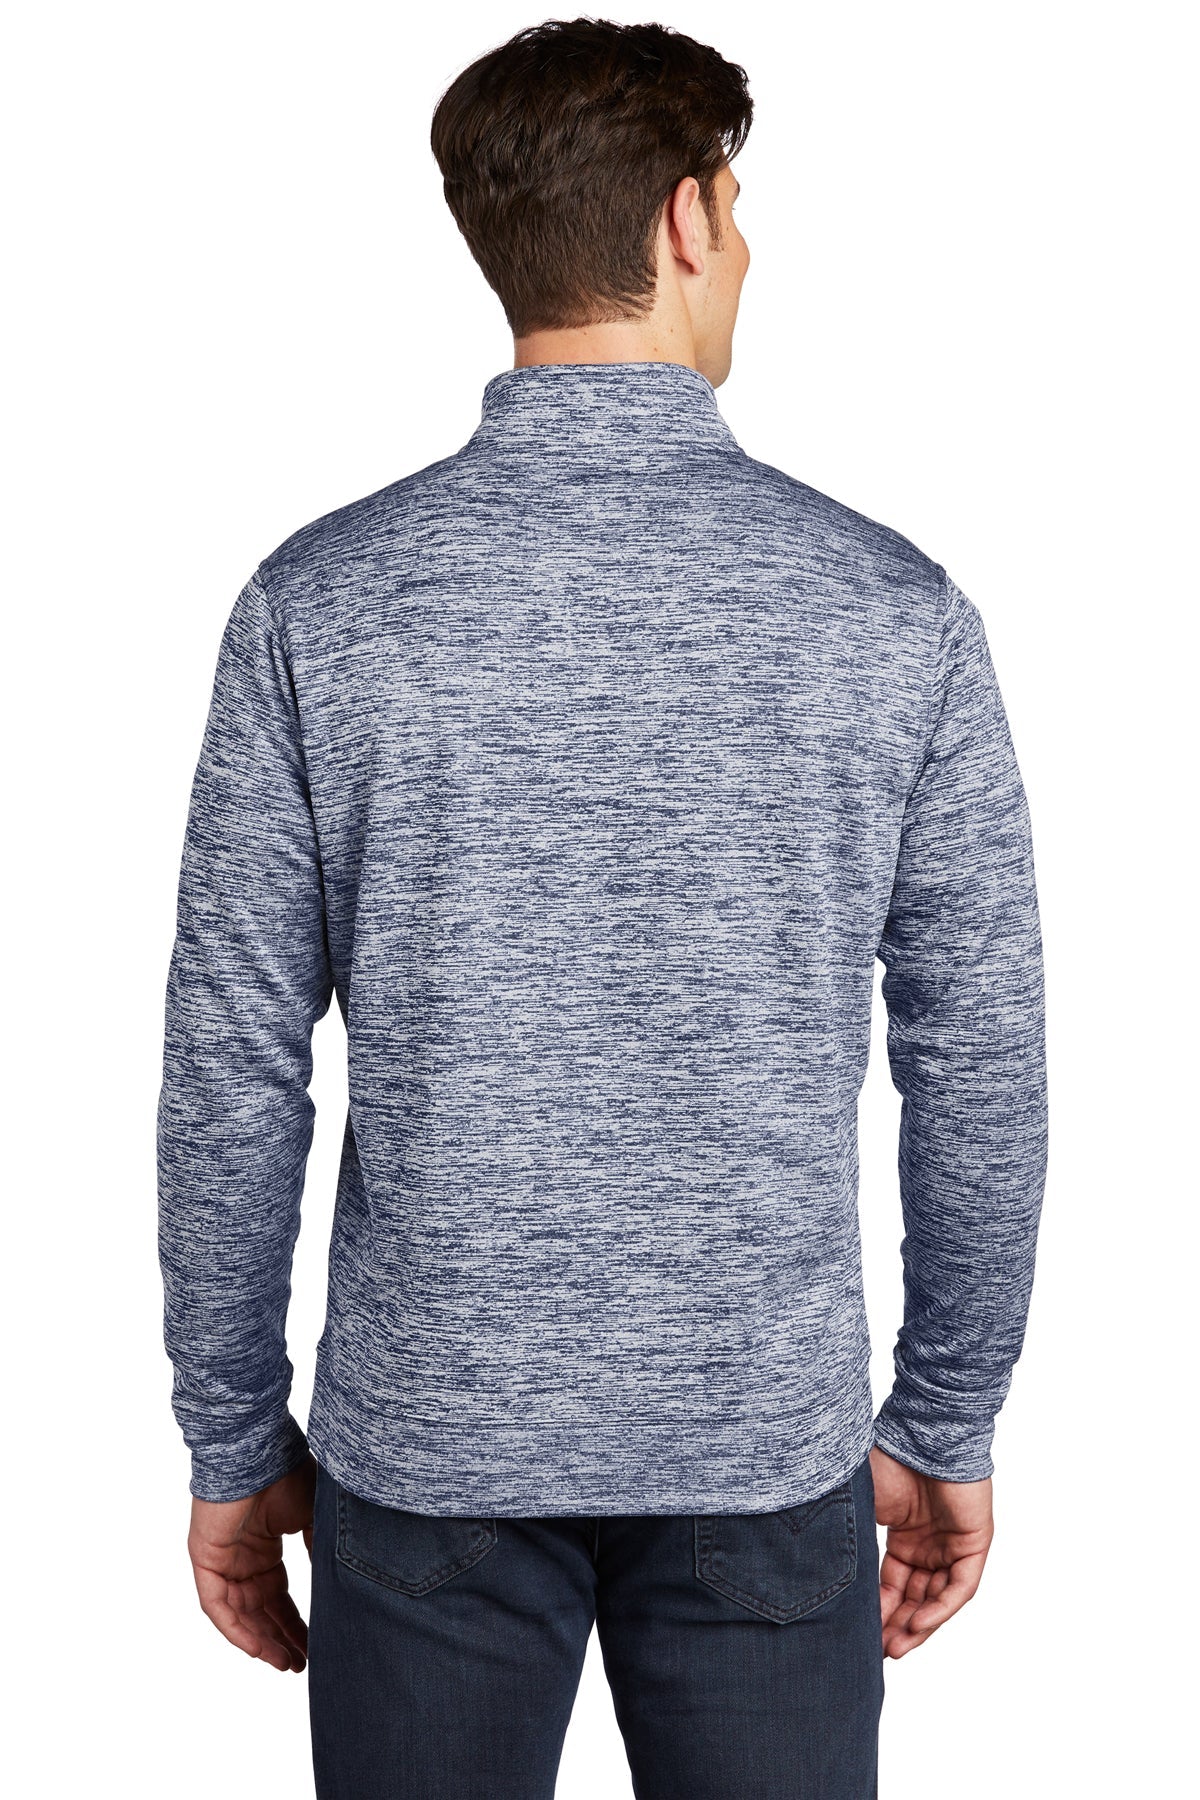 sport-tek_st226 _true navy electric_company_logo_sweatshirts